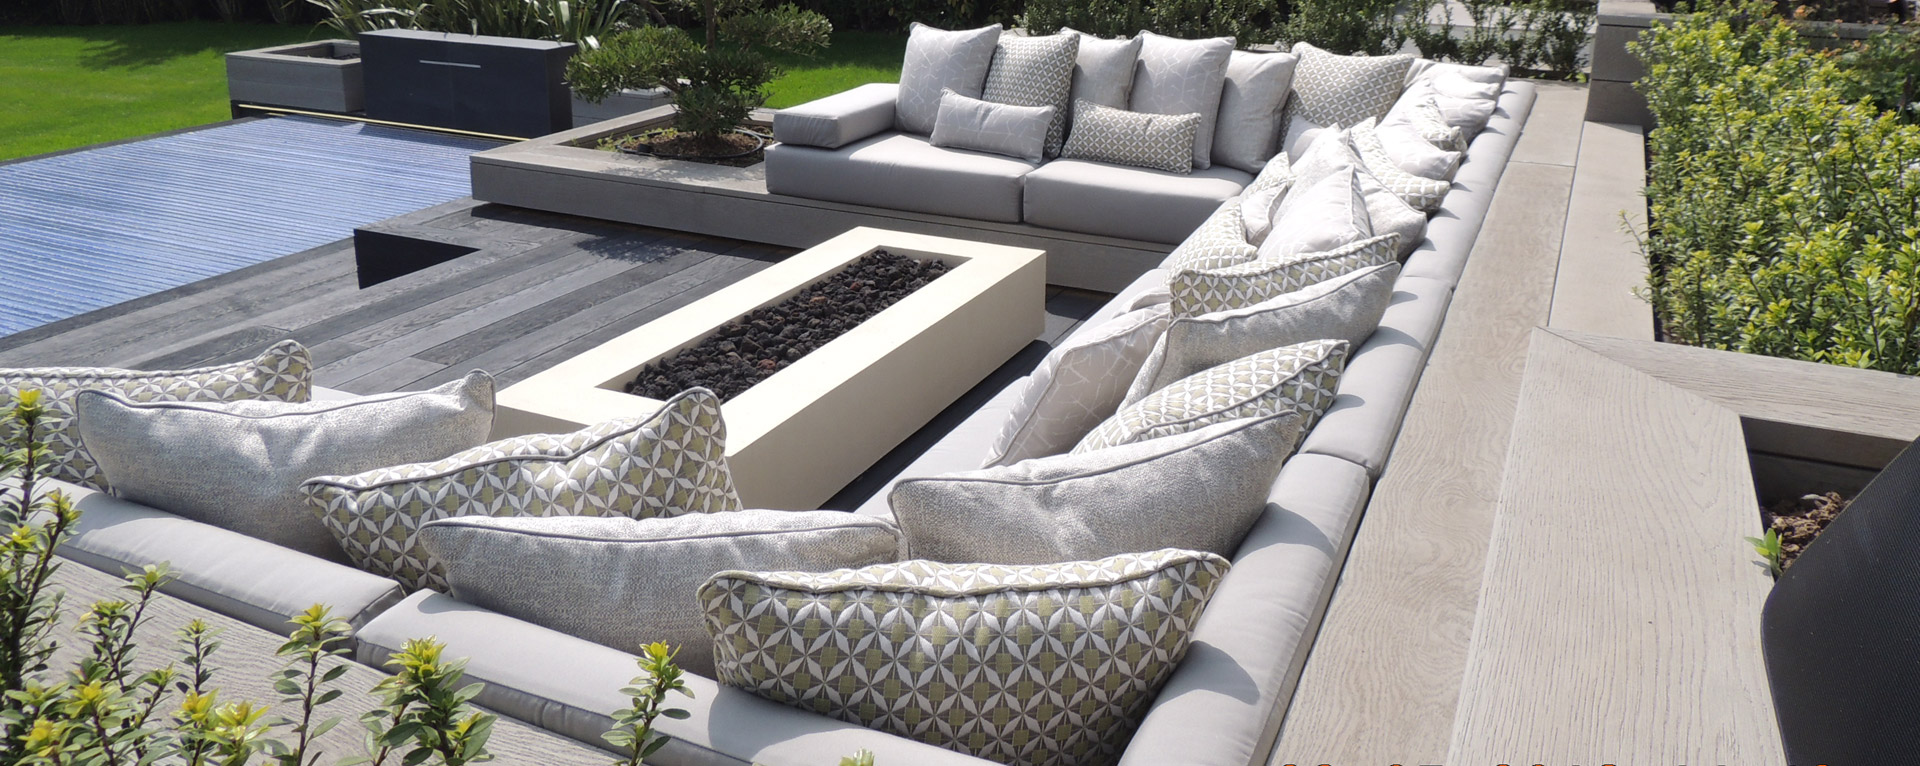 Bespoke waterproof and water repellent Outdoor Cushions